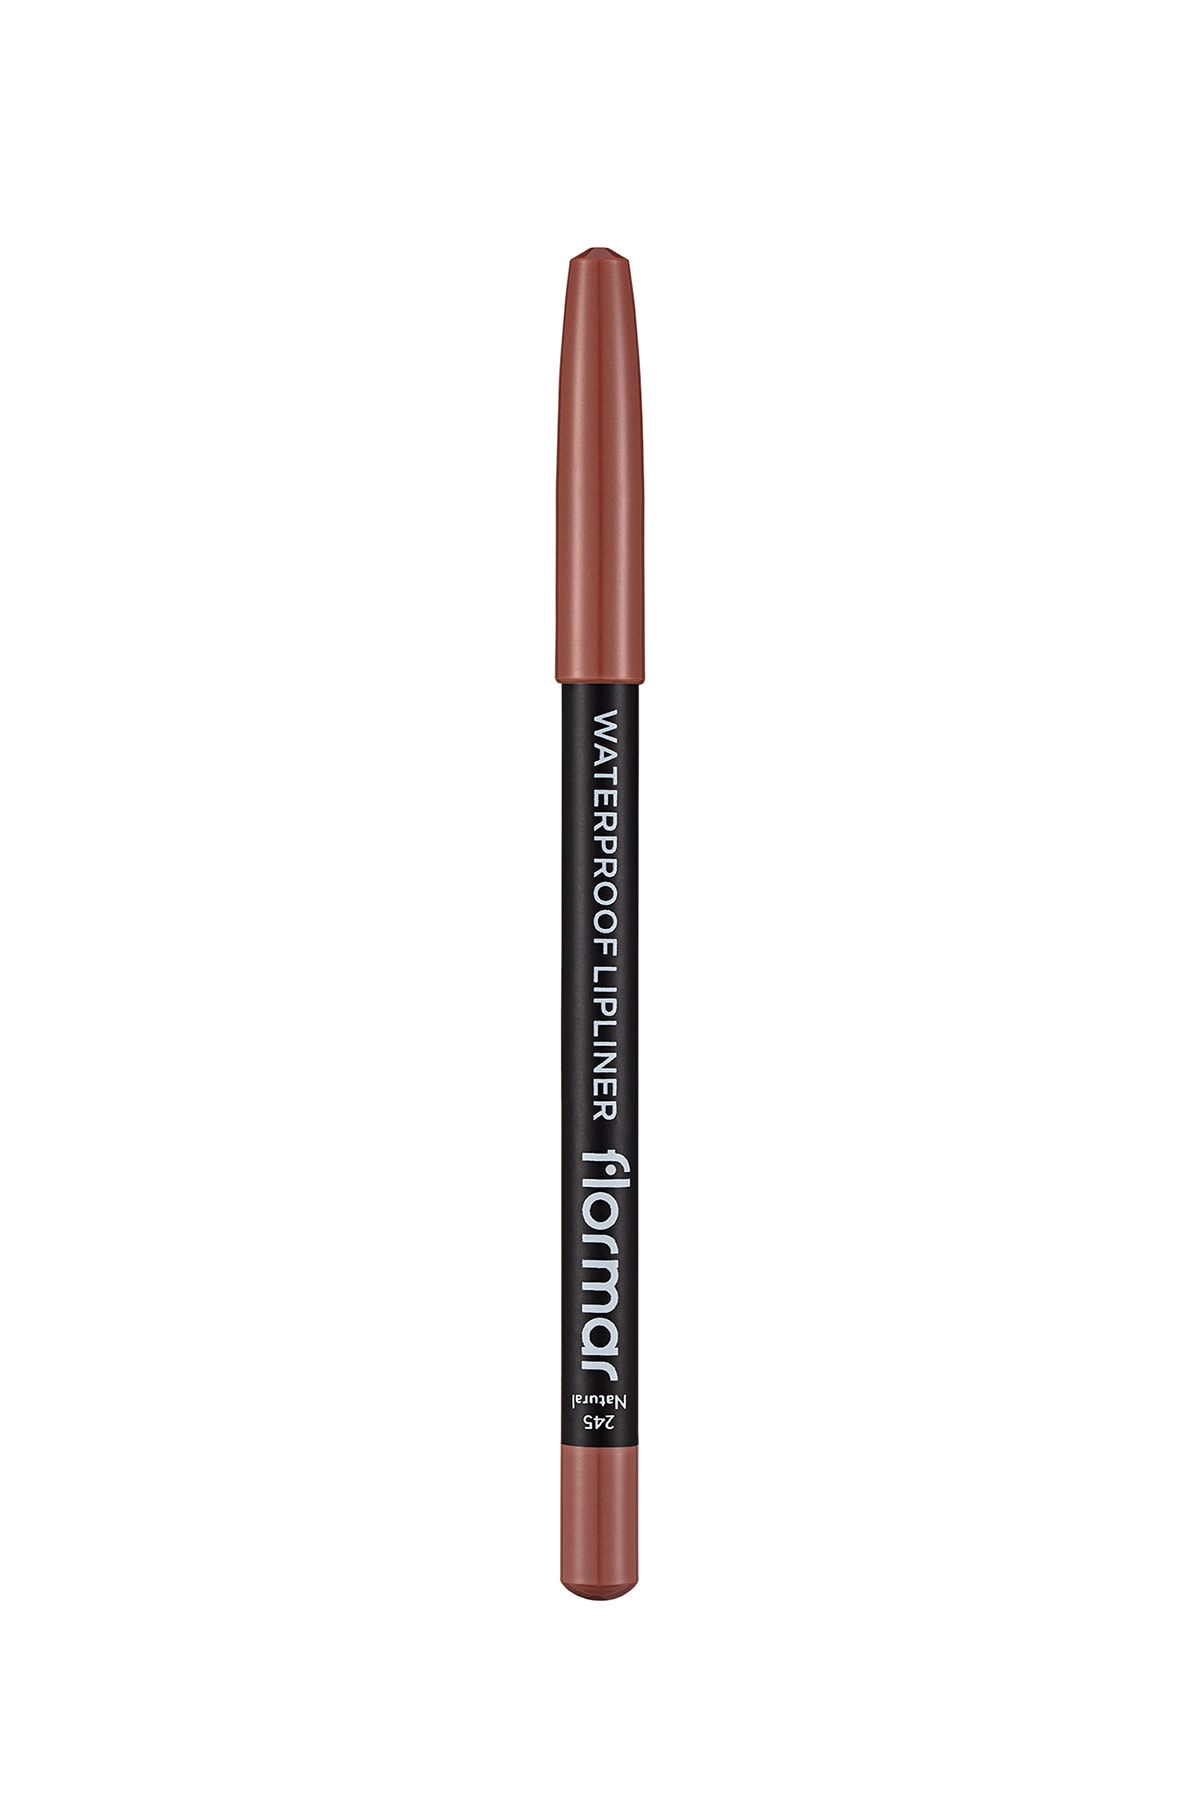 Flormar مداد لب مقاوم در برابر آب (قهوه تاریک طبیعی) مداد لب ضدآب رنگ طبیعی